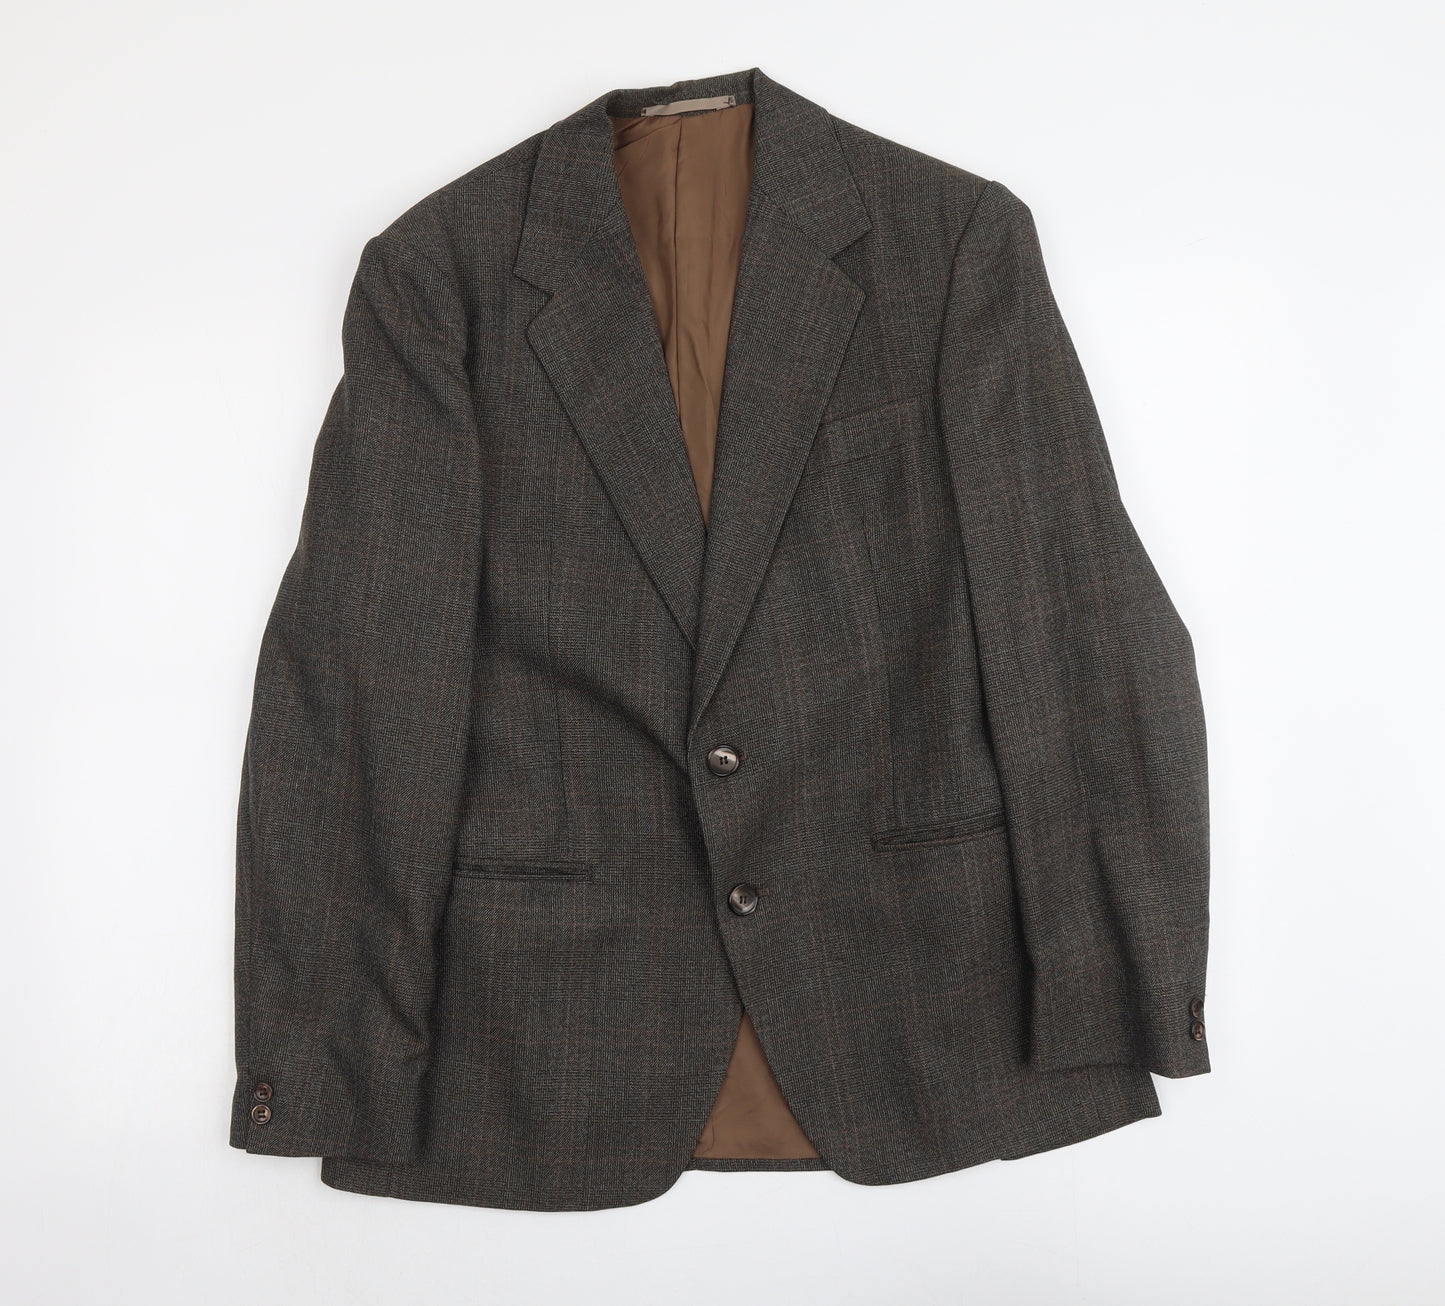 Hardy Amies Mens Grey Geometric Wool Jacket Suit Jacket Size M Regular